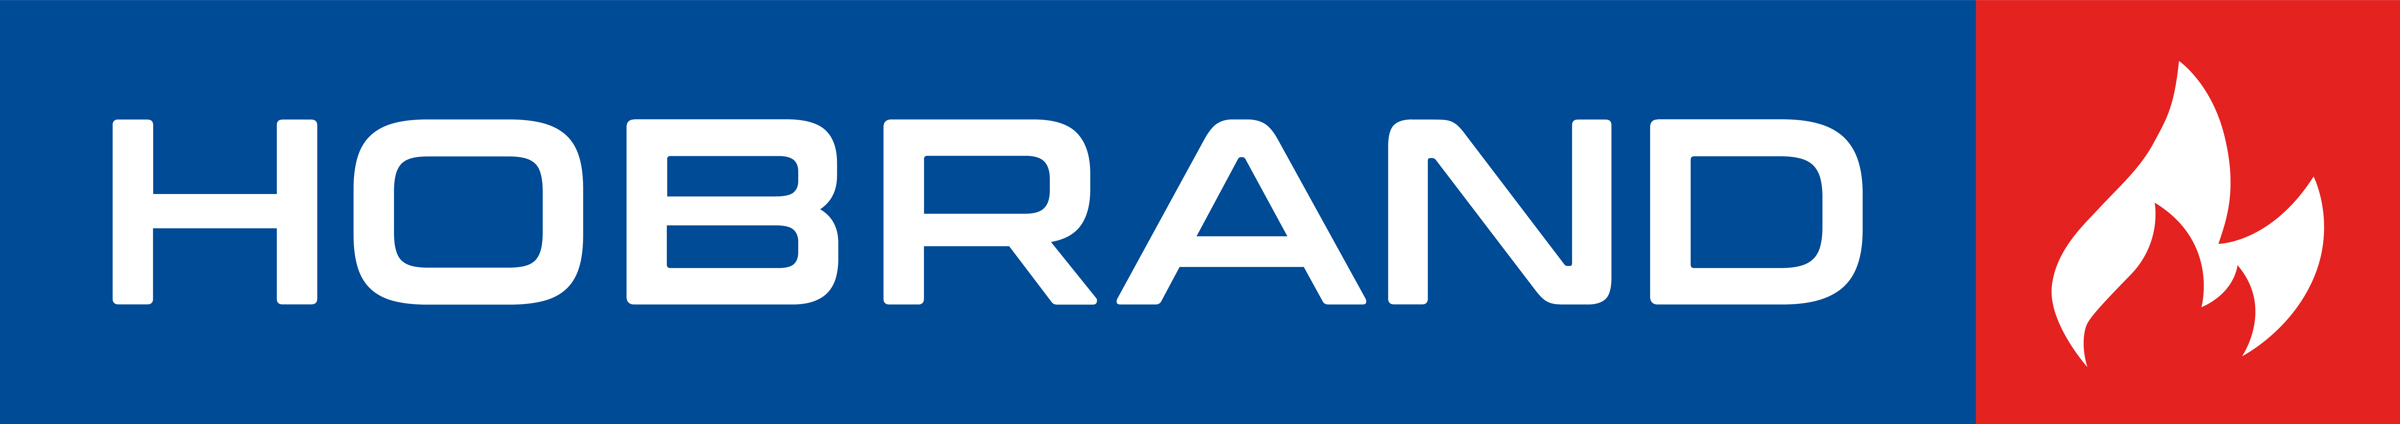 Hobrand Logo Pos RGB